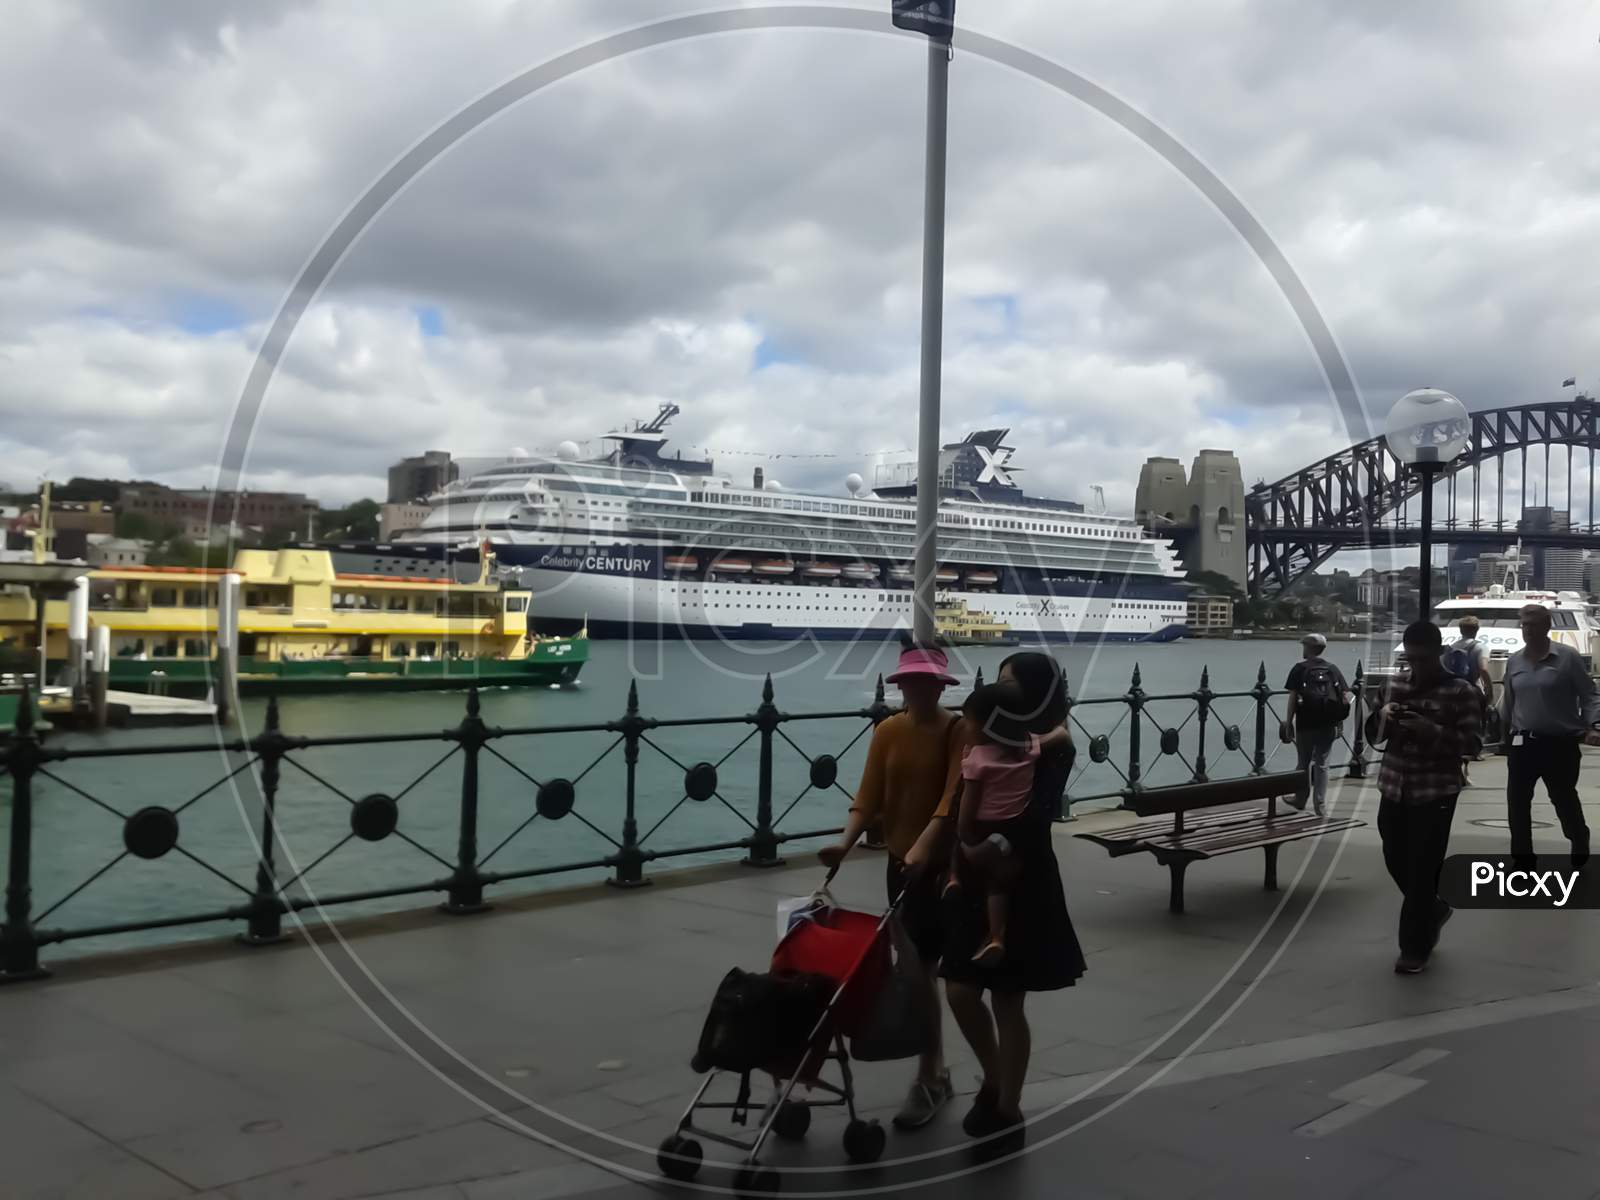 Sydney Nsw, Australia,22/10/2014 Celebrity Century Docked In Sydney Port ,Sydney Harbour Bridge Also Visible